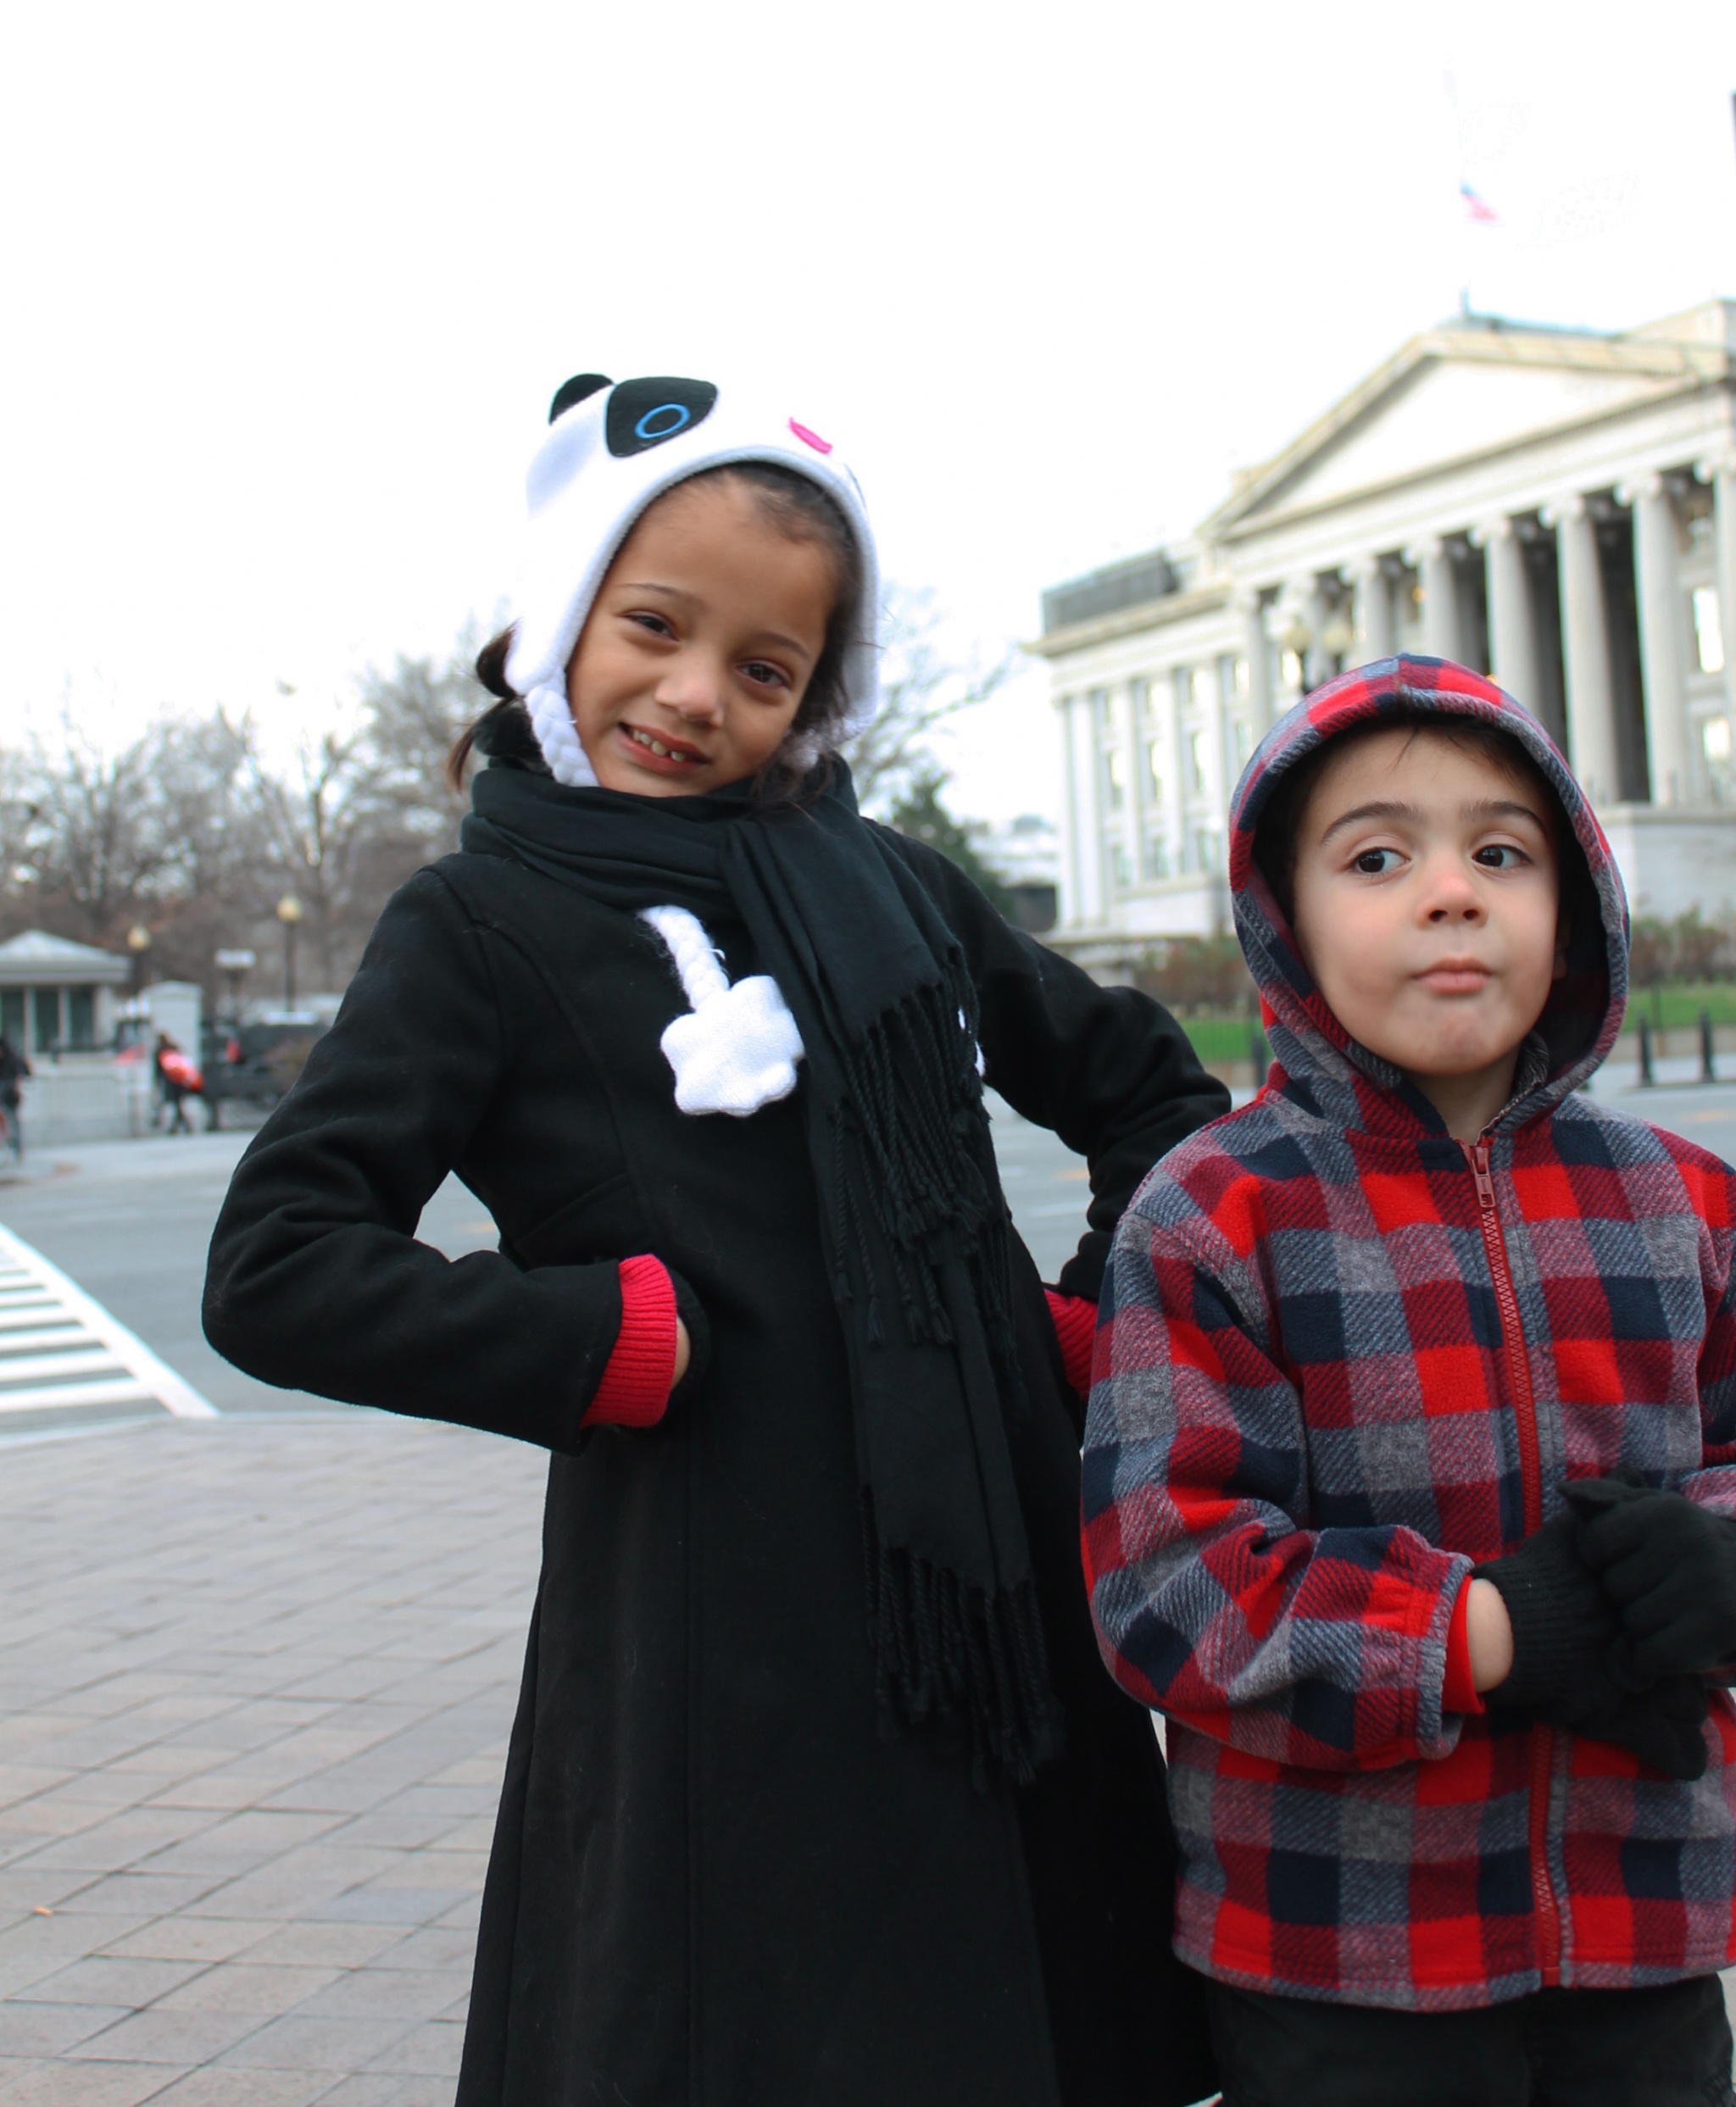 Visiting Washington D.C. with kids